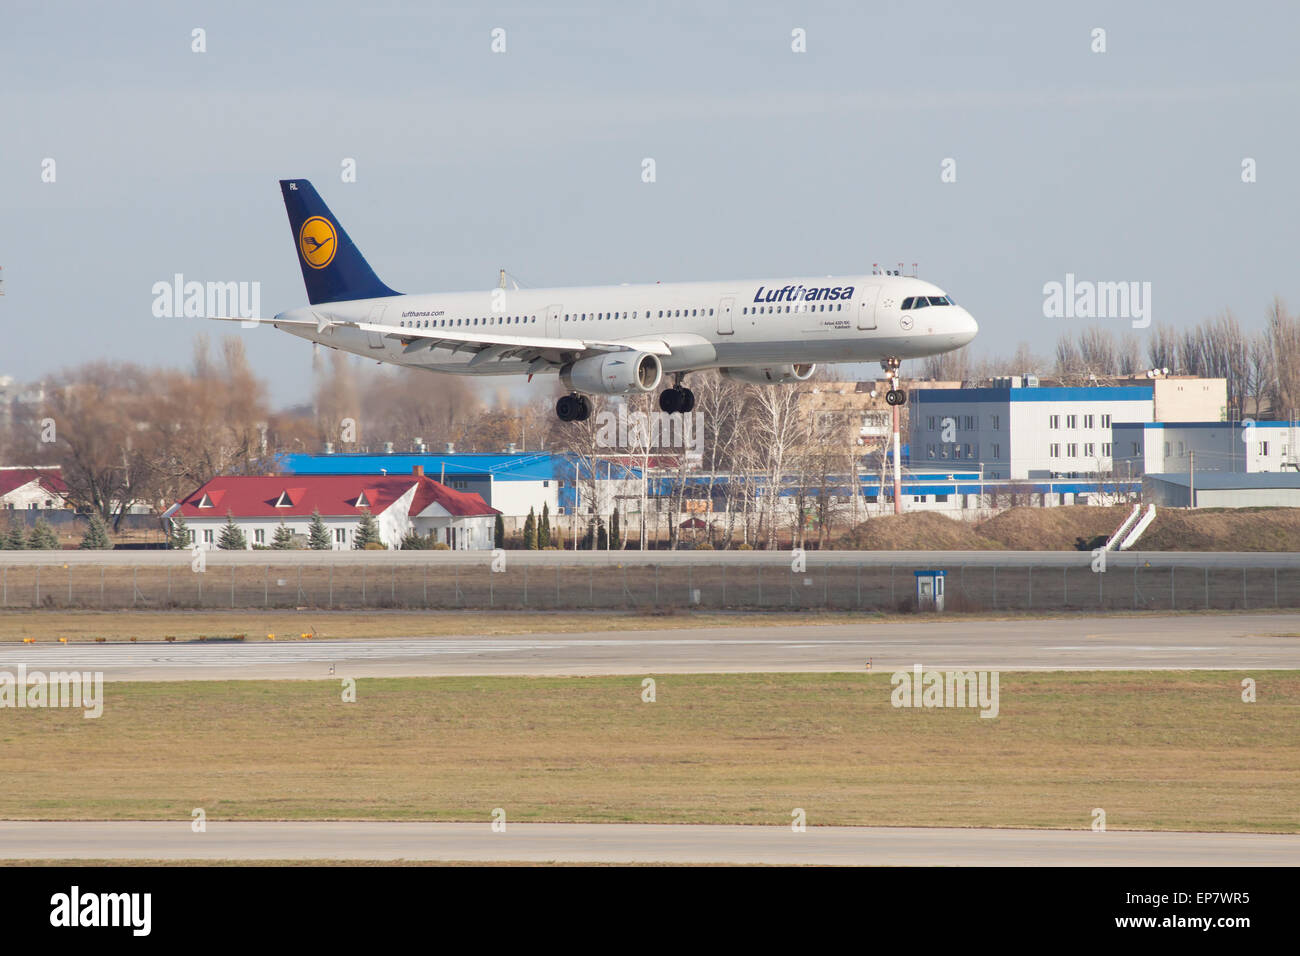 Boryspil, Ukraine - November 13, 2010: Lufthansa Airbus A321 on final approach landing on the runway Stock Photo